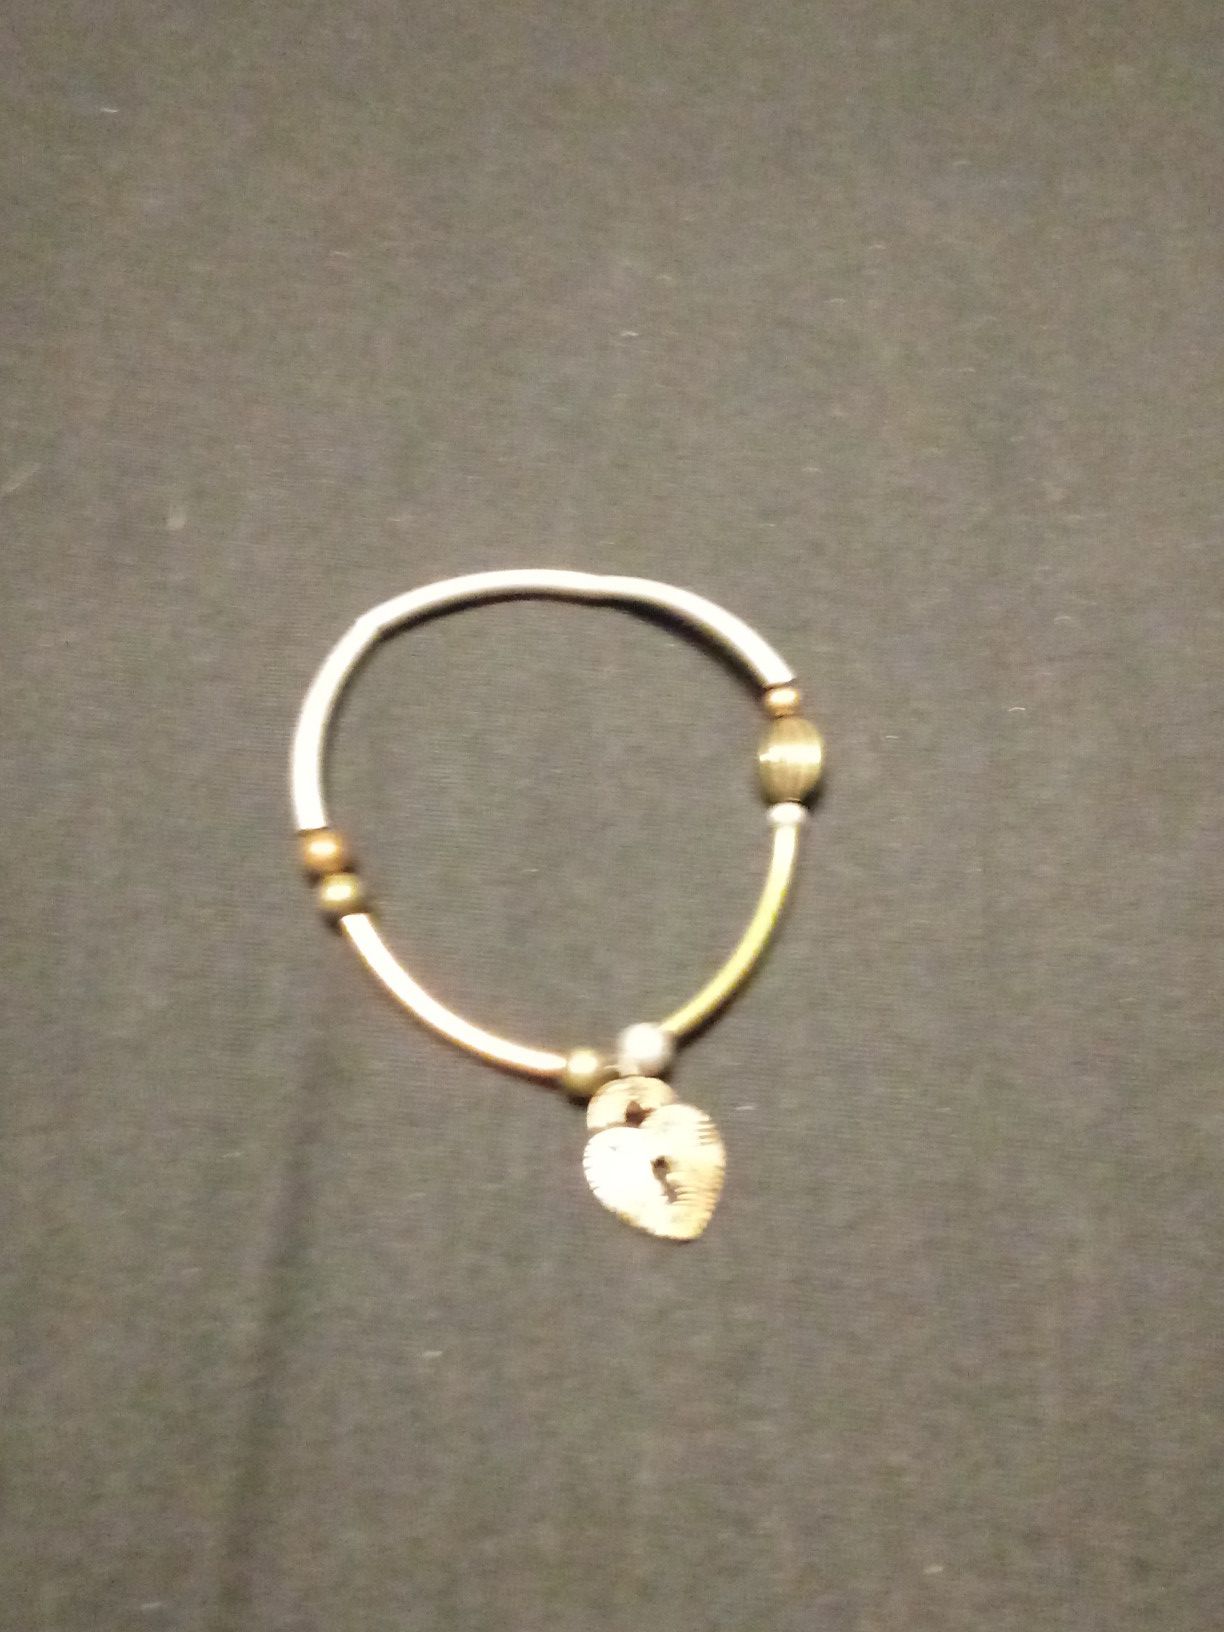 Brown beaded bracelet with lock charm